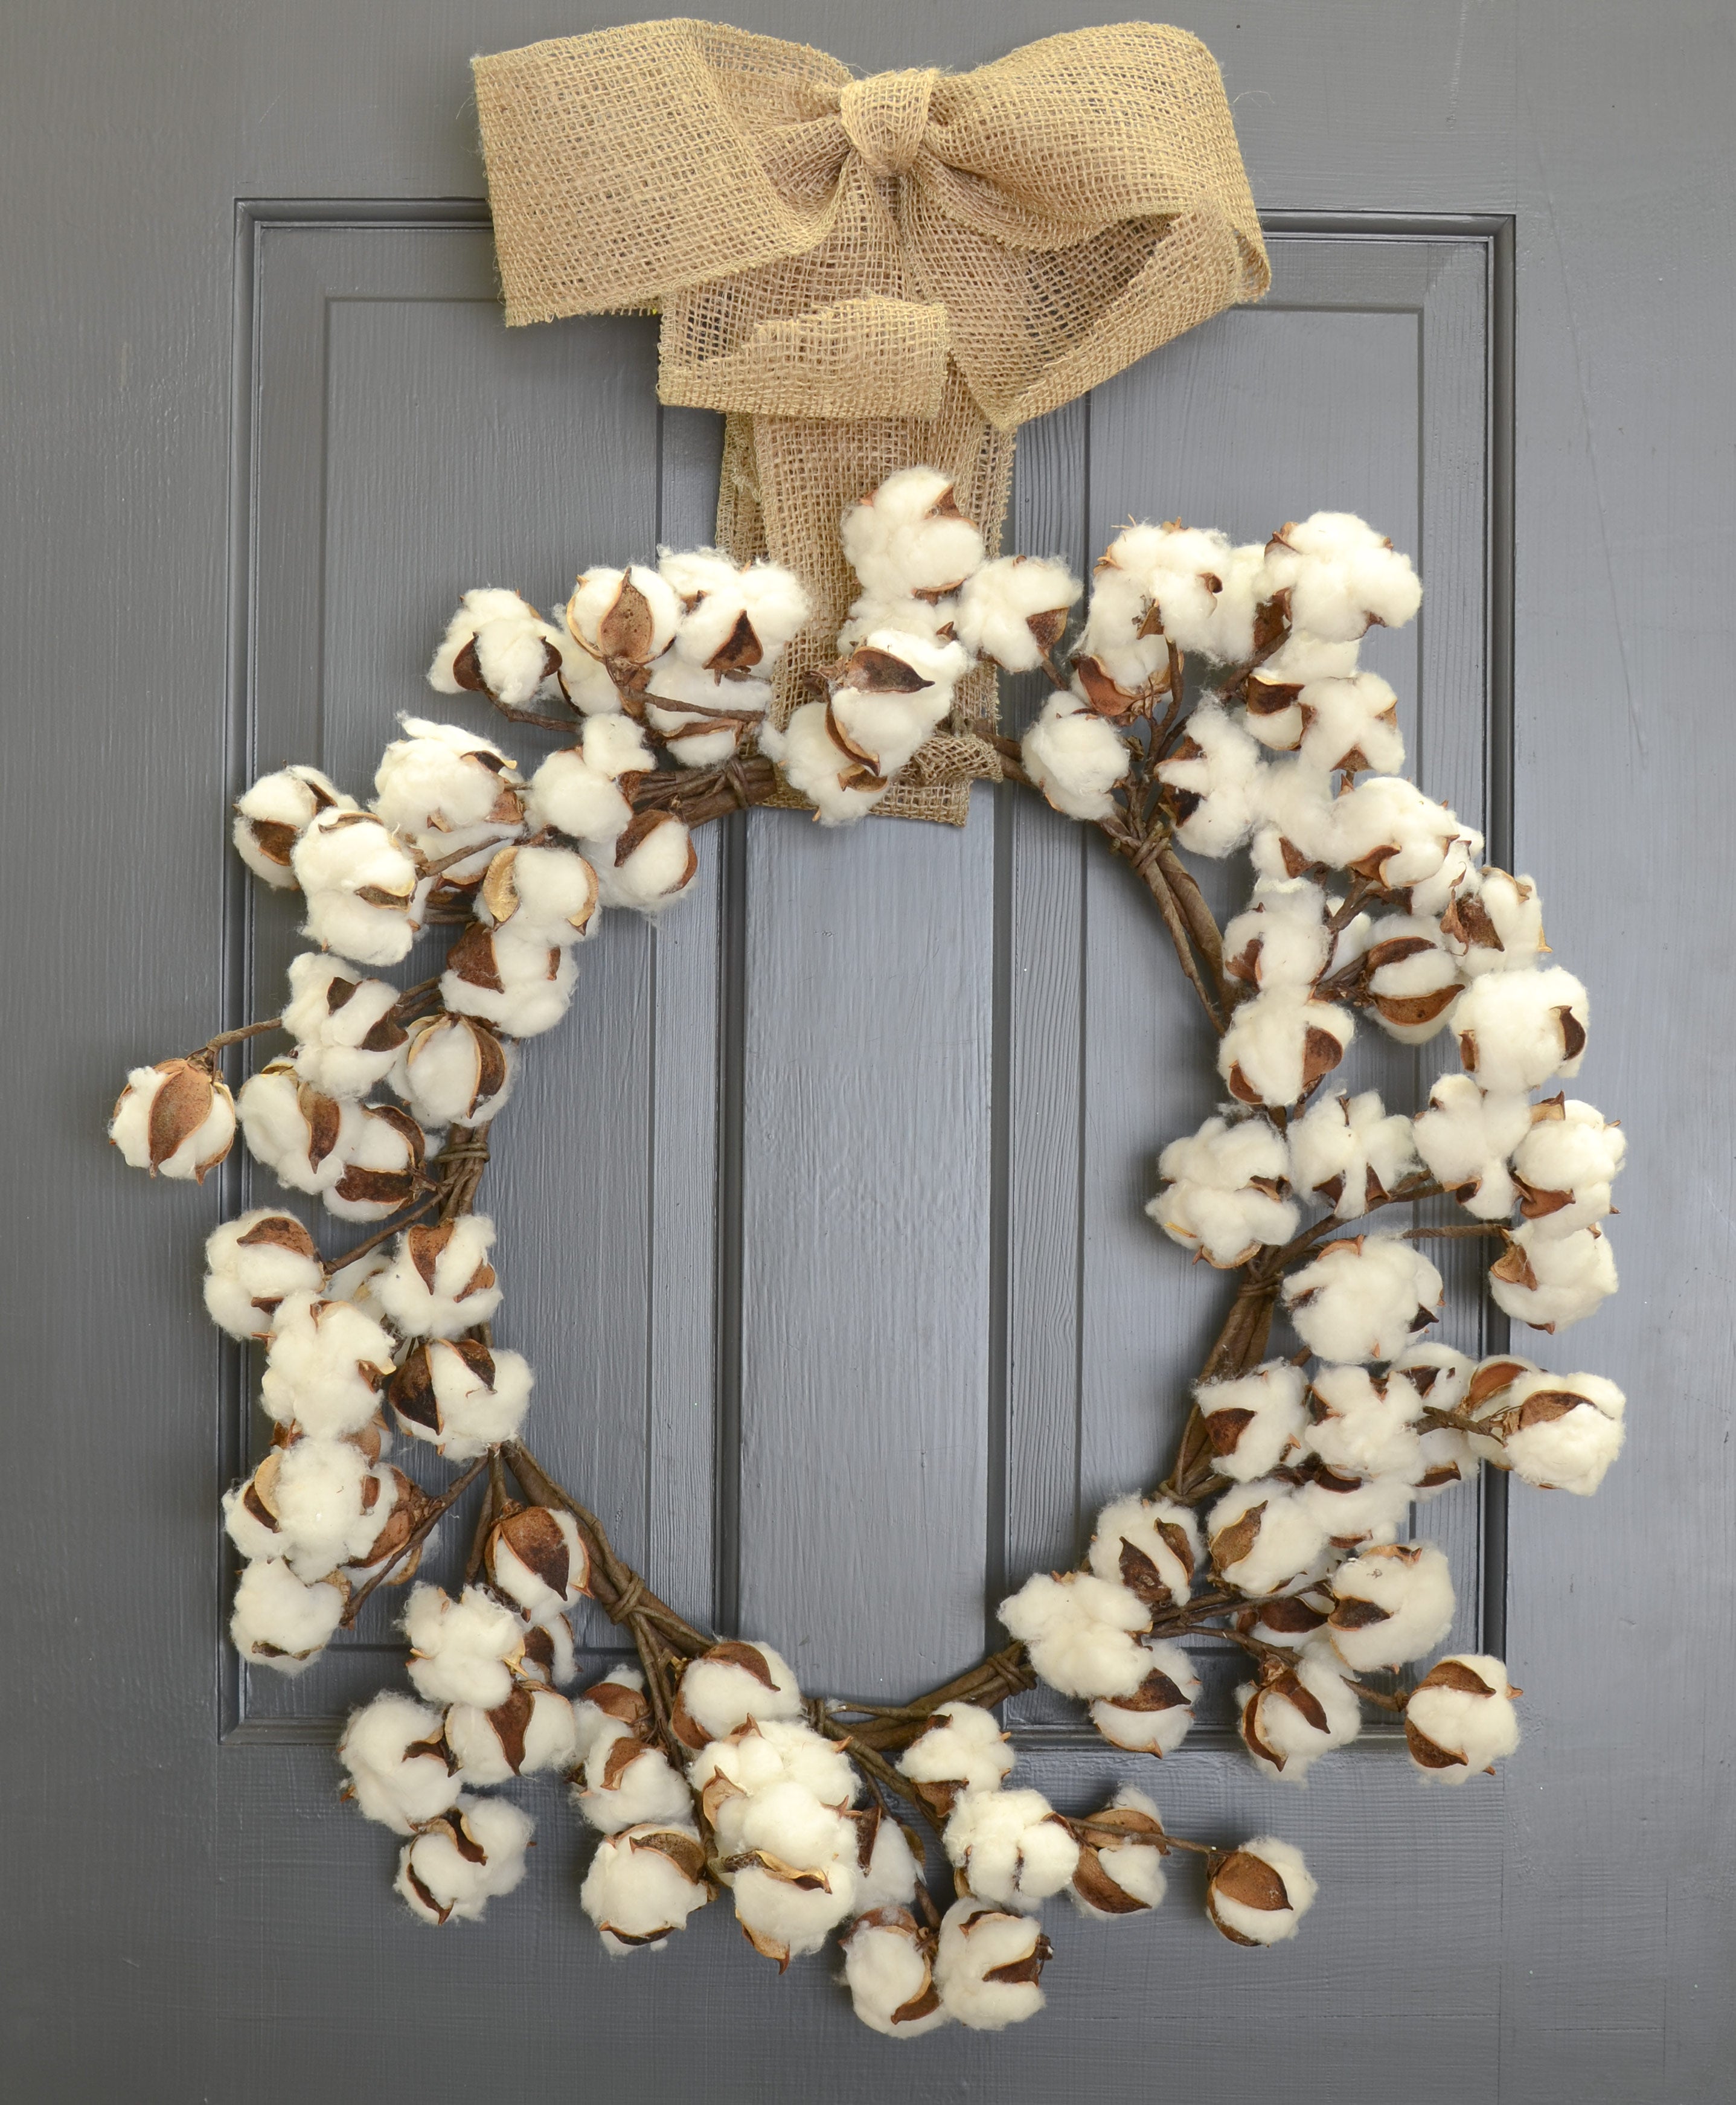 20" Cotton Boll Wreath